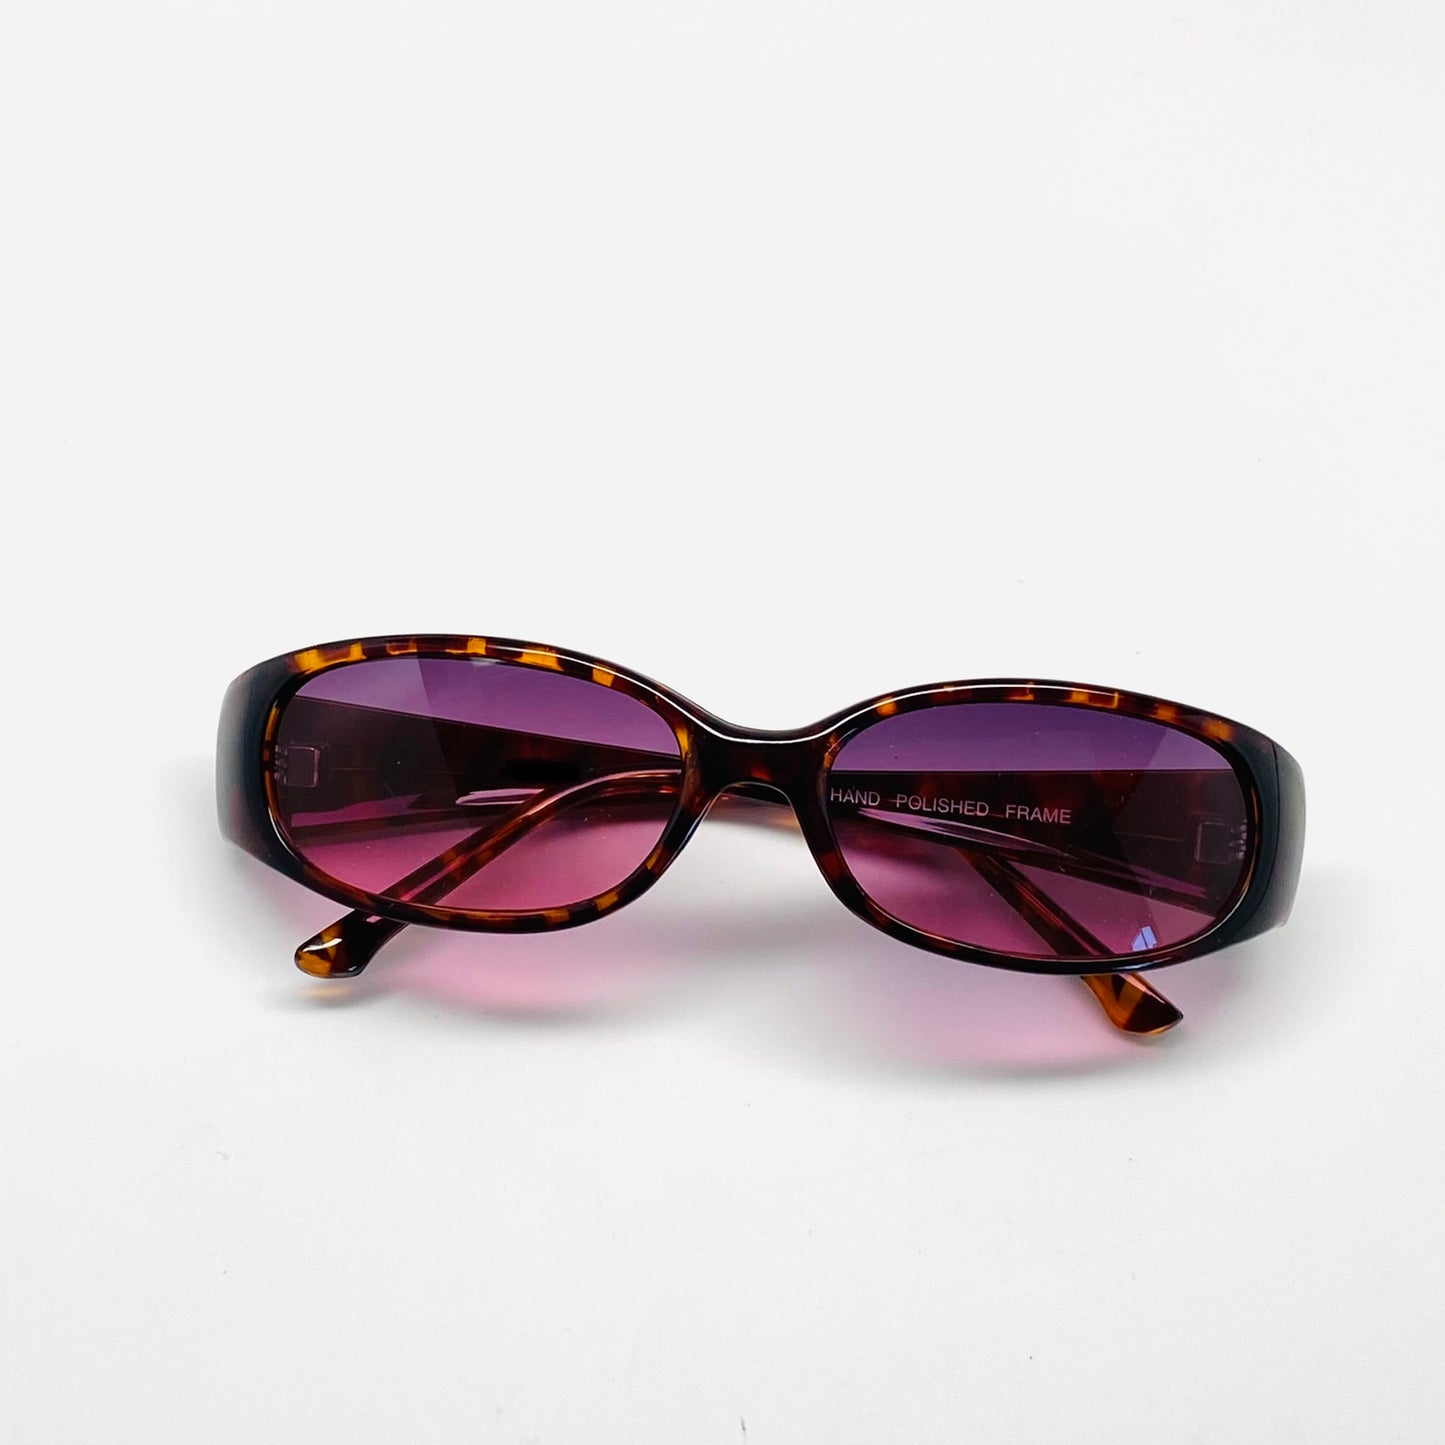 Vintage Small Size Alexine Oval Frame Sunglasses - Tortoise Purple